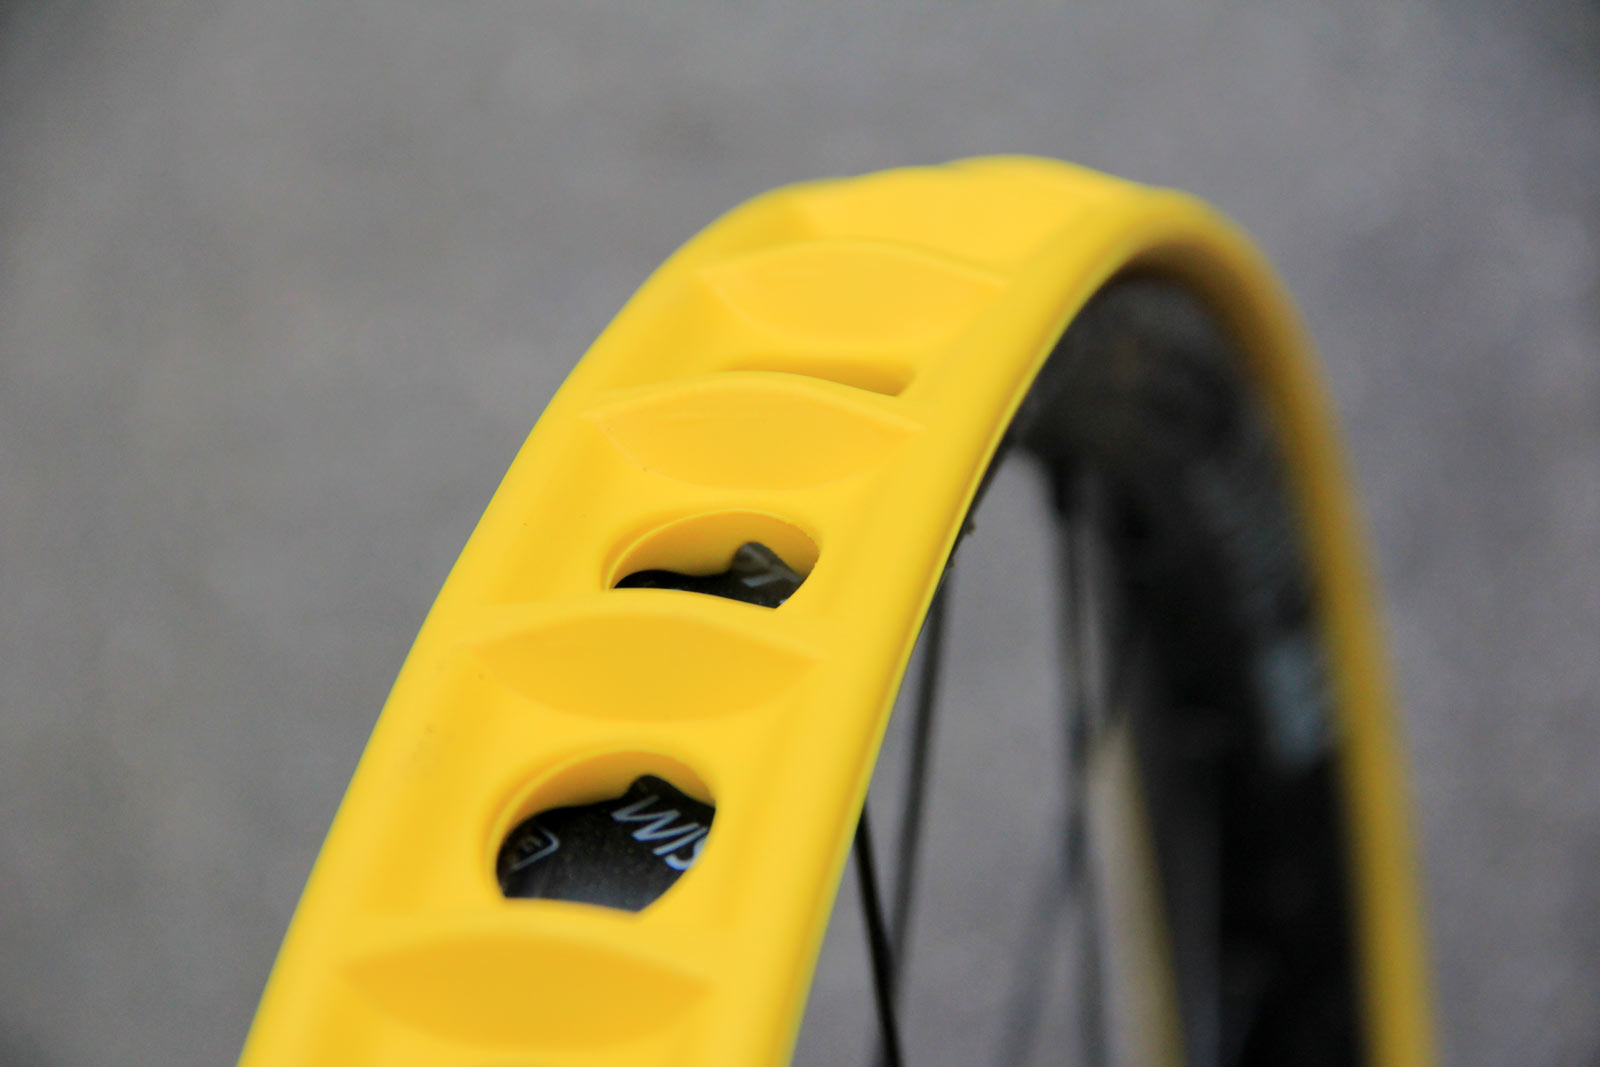 https://bikerumor.com/wp-content/uploads/2021/09/rockstop-mtb-tire-insert-review-rim-protection.jpg